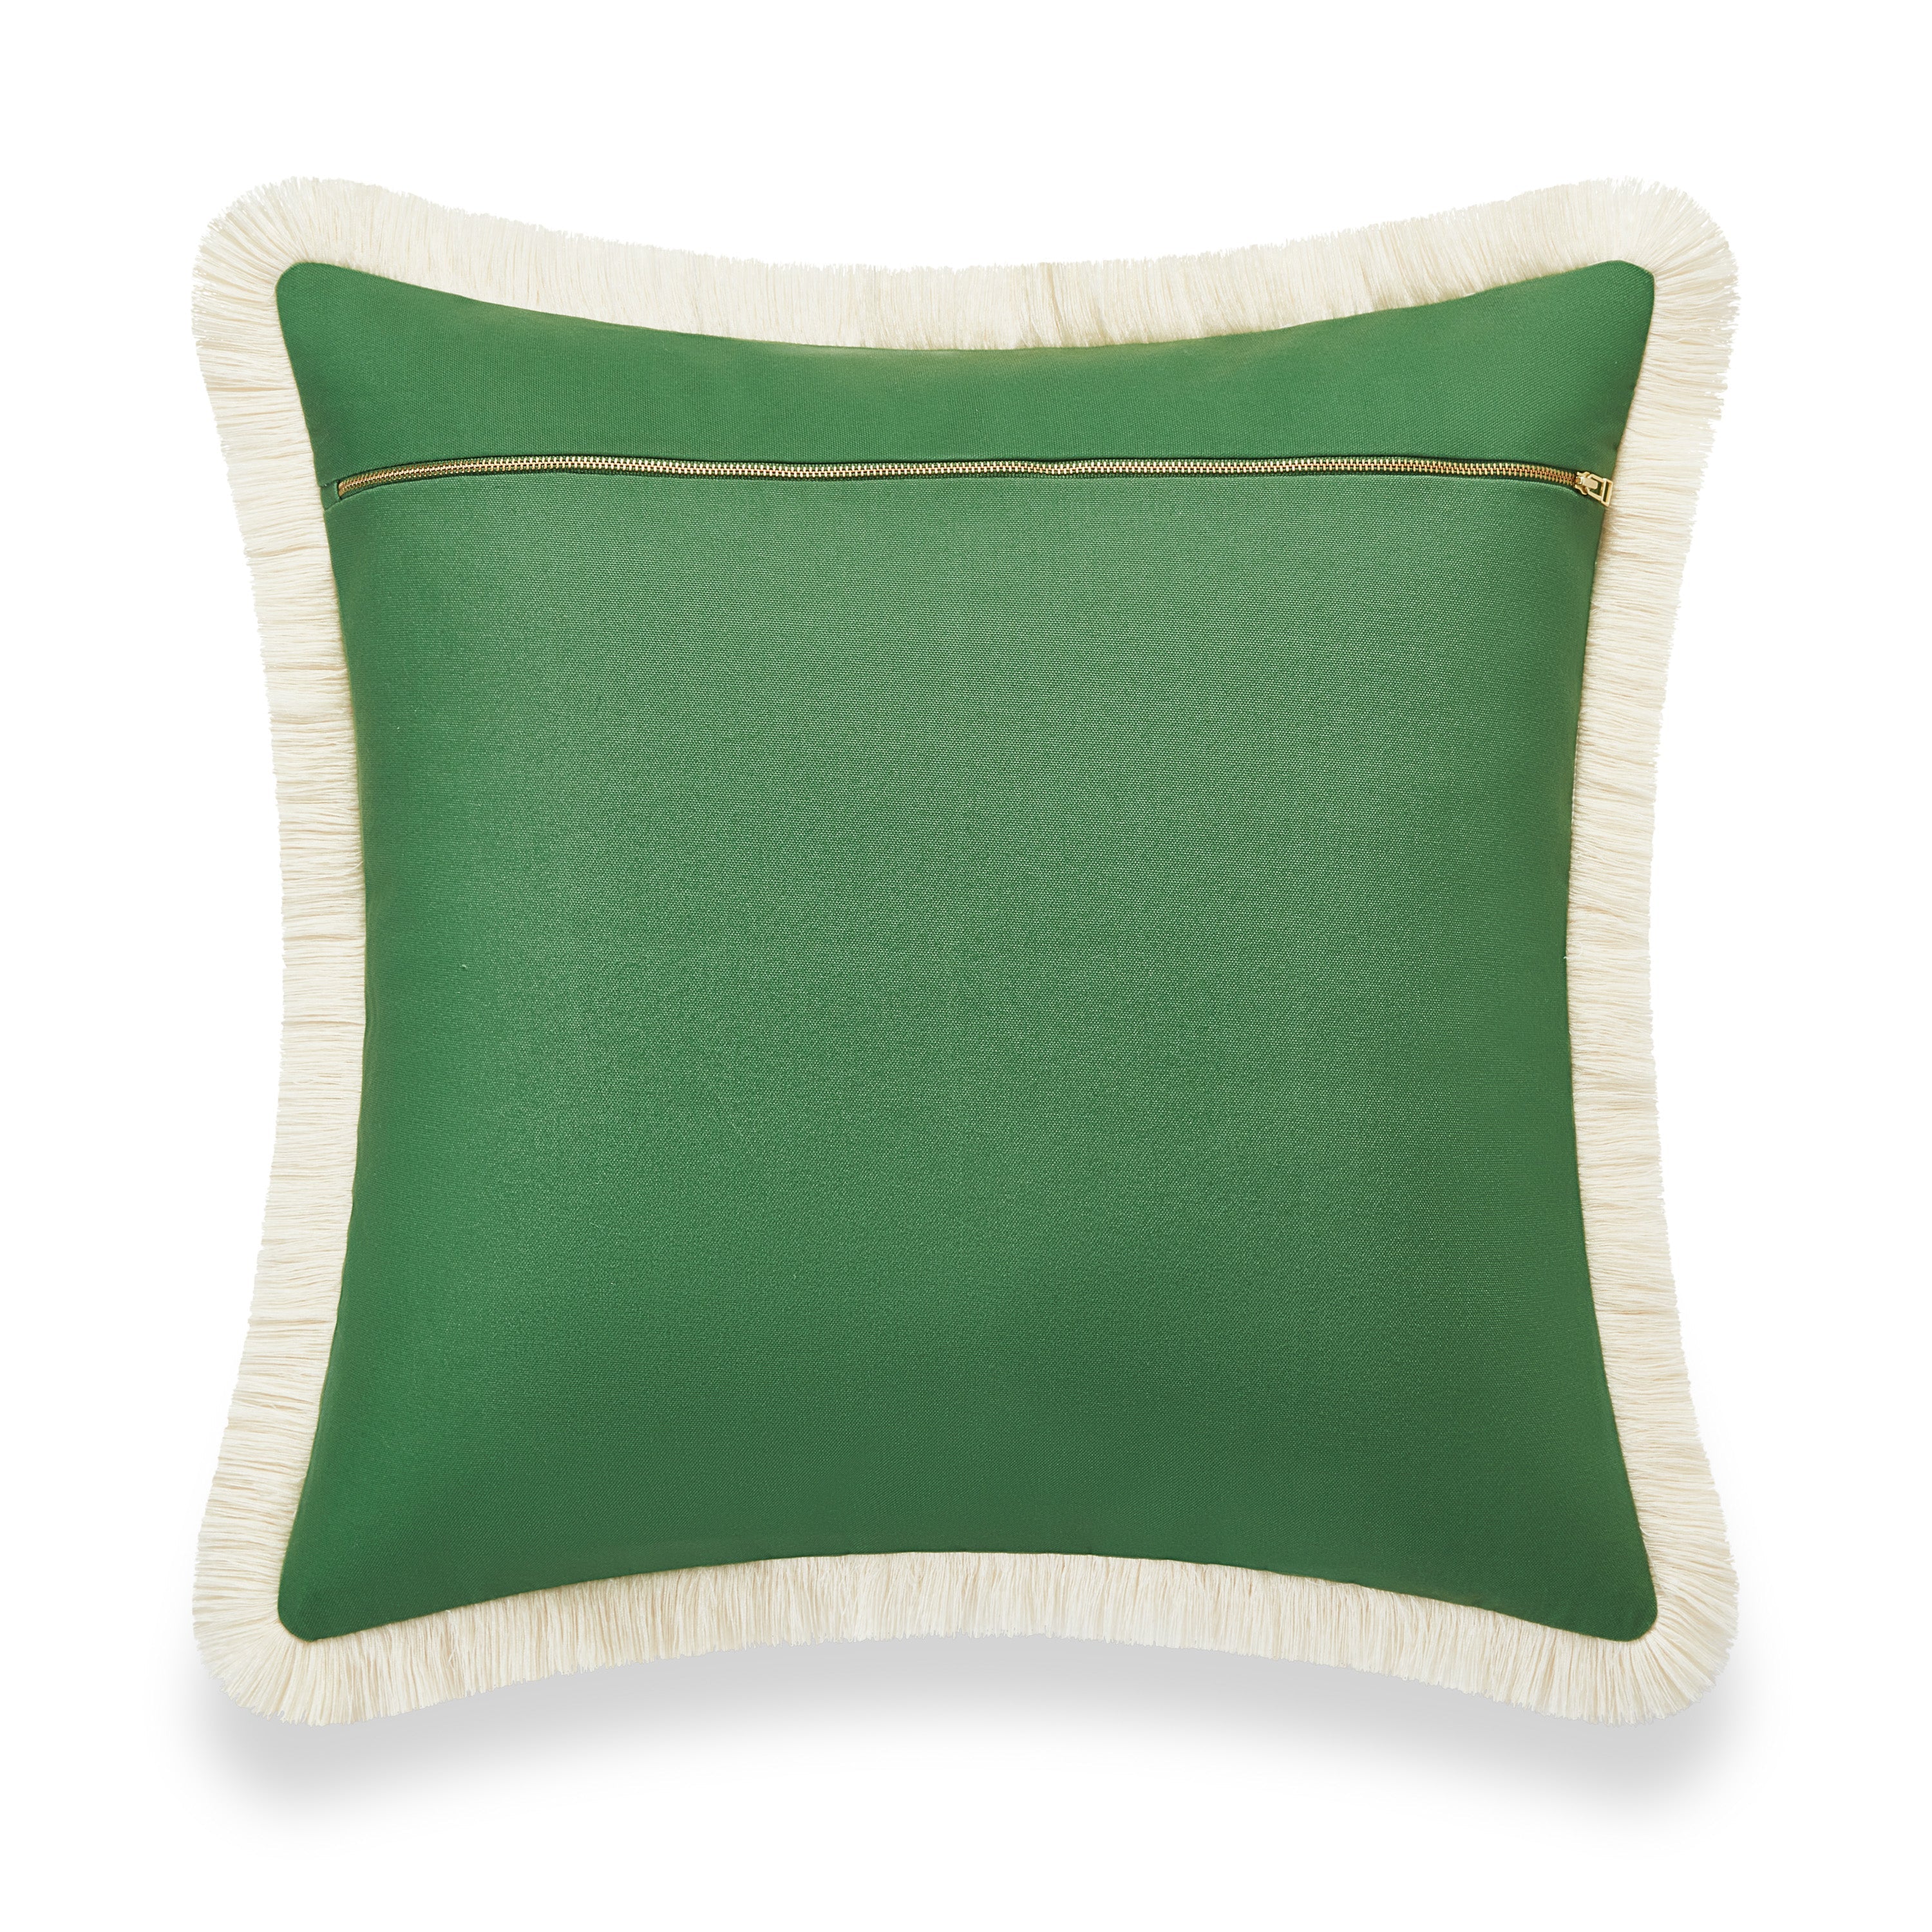 Coastal Indoor Outdoor Pillow Cover, Monstera Leaf Fringe, Green, 20"x20"